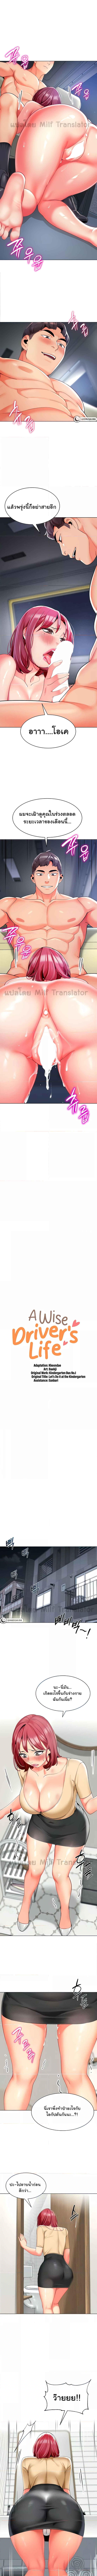 A Wise Driverโ€s Life 20 1